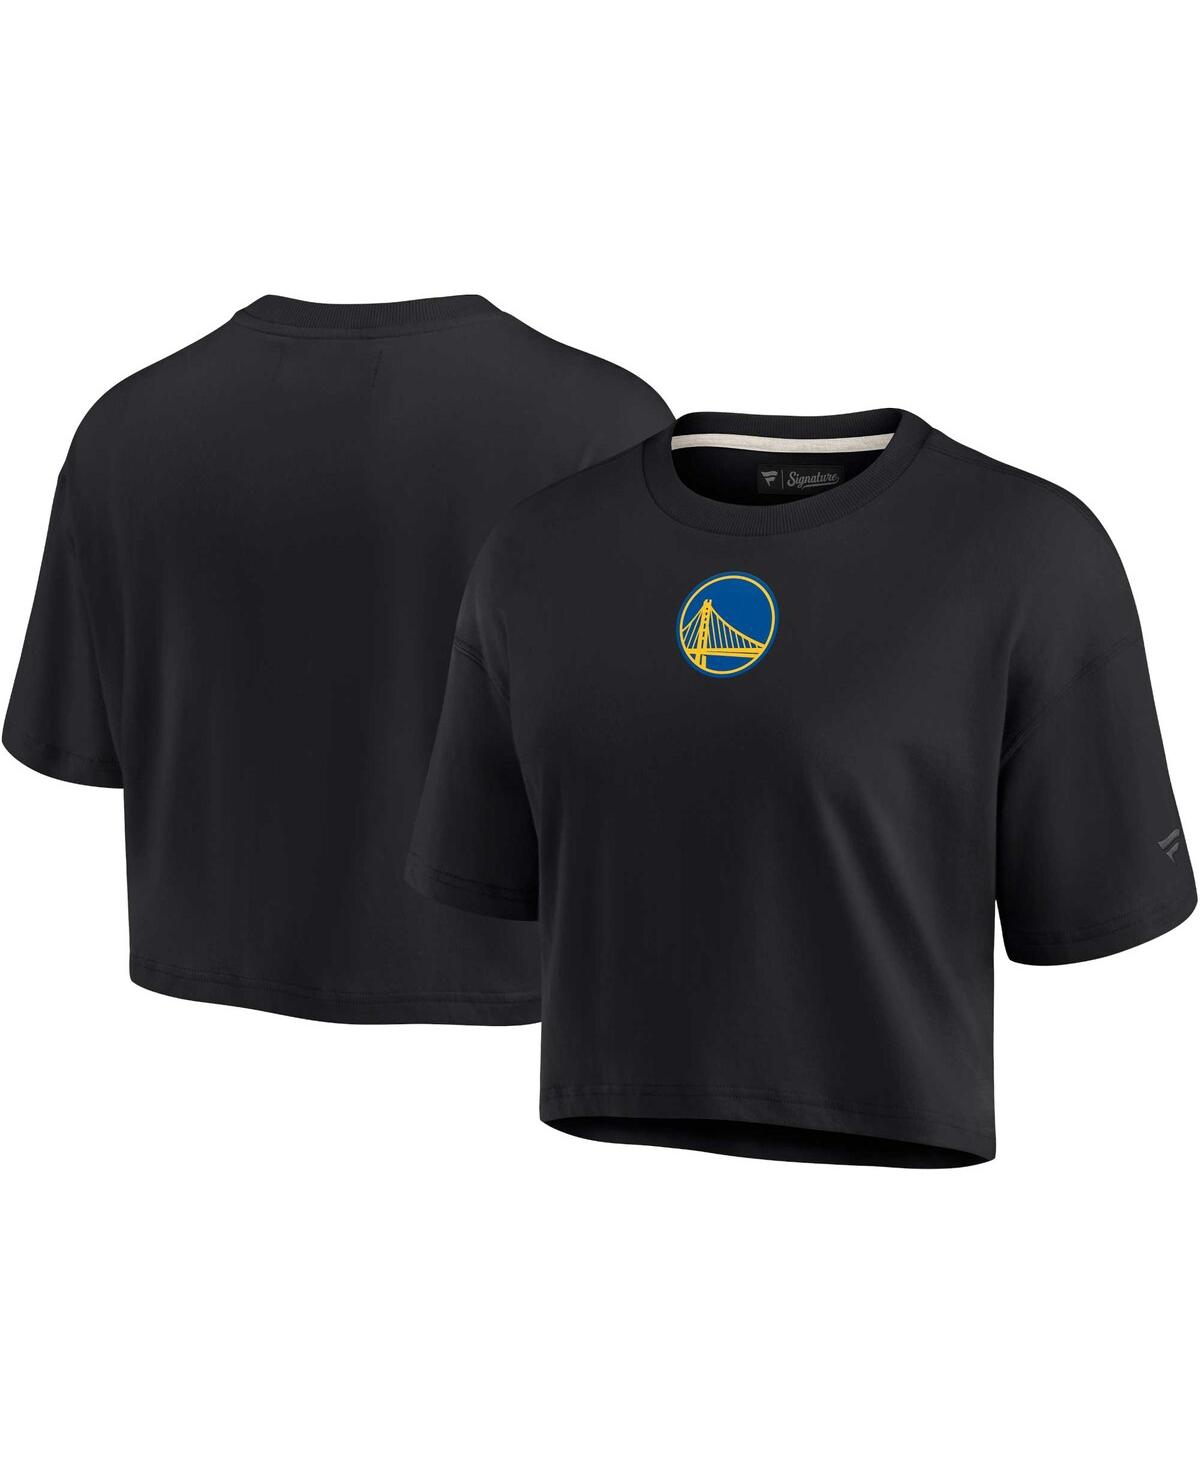 Shop Fanatics Signature Women's  Black Golden State Warriors Super Soft Boxy Cropped T-shirt